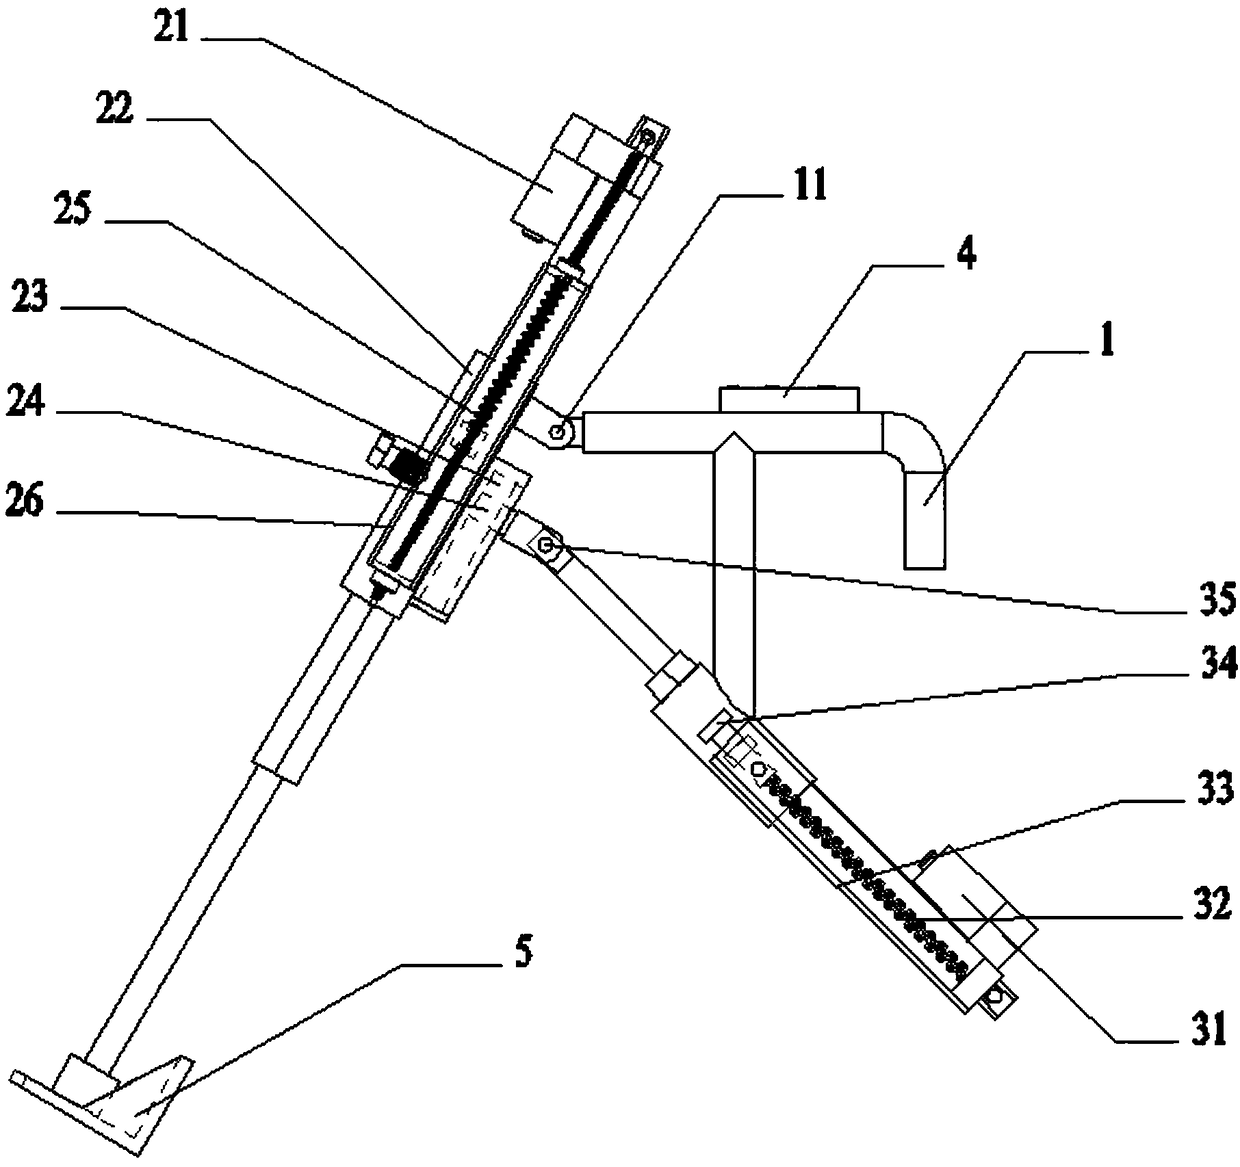 Automatic rehabilitation apparatus for lower-limb rehabilitation